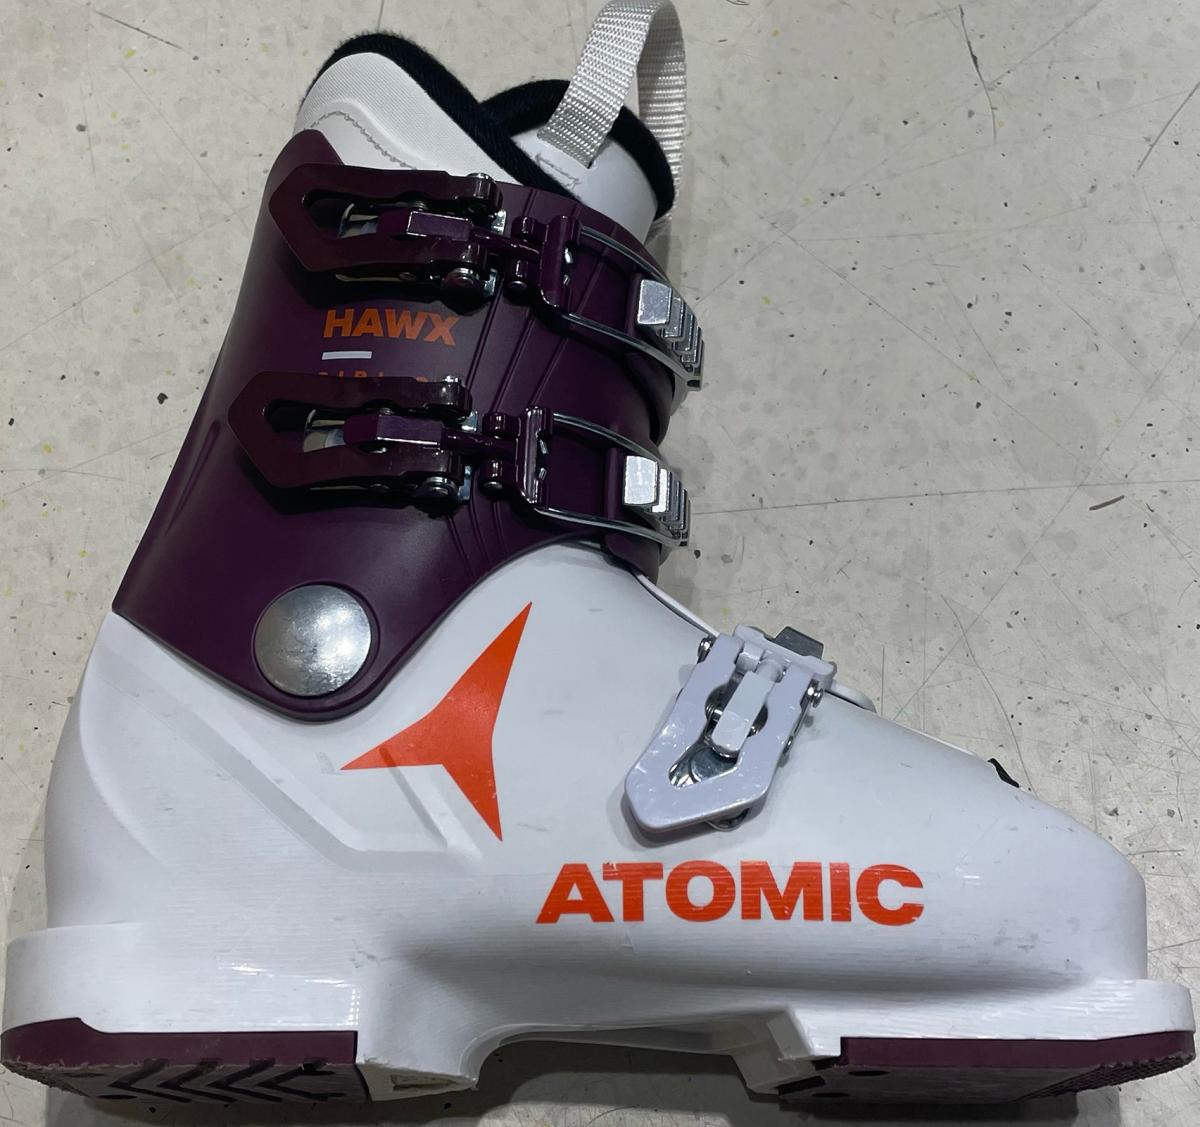 Atomic Hawx Girl3 used ski boot